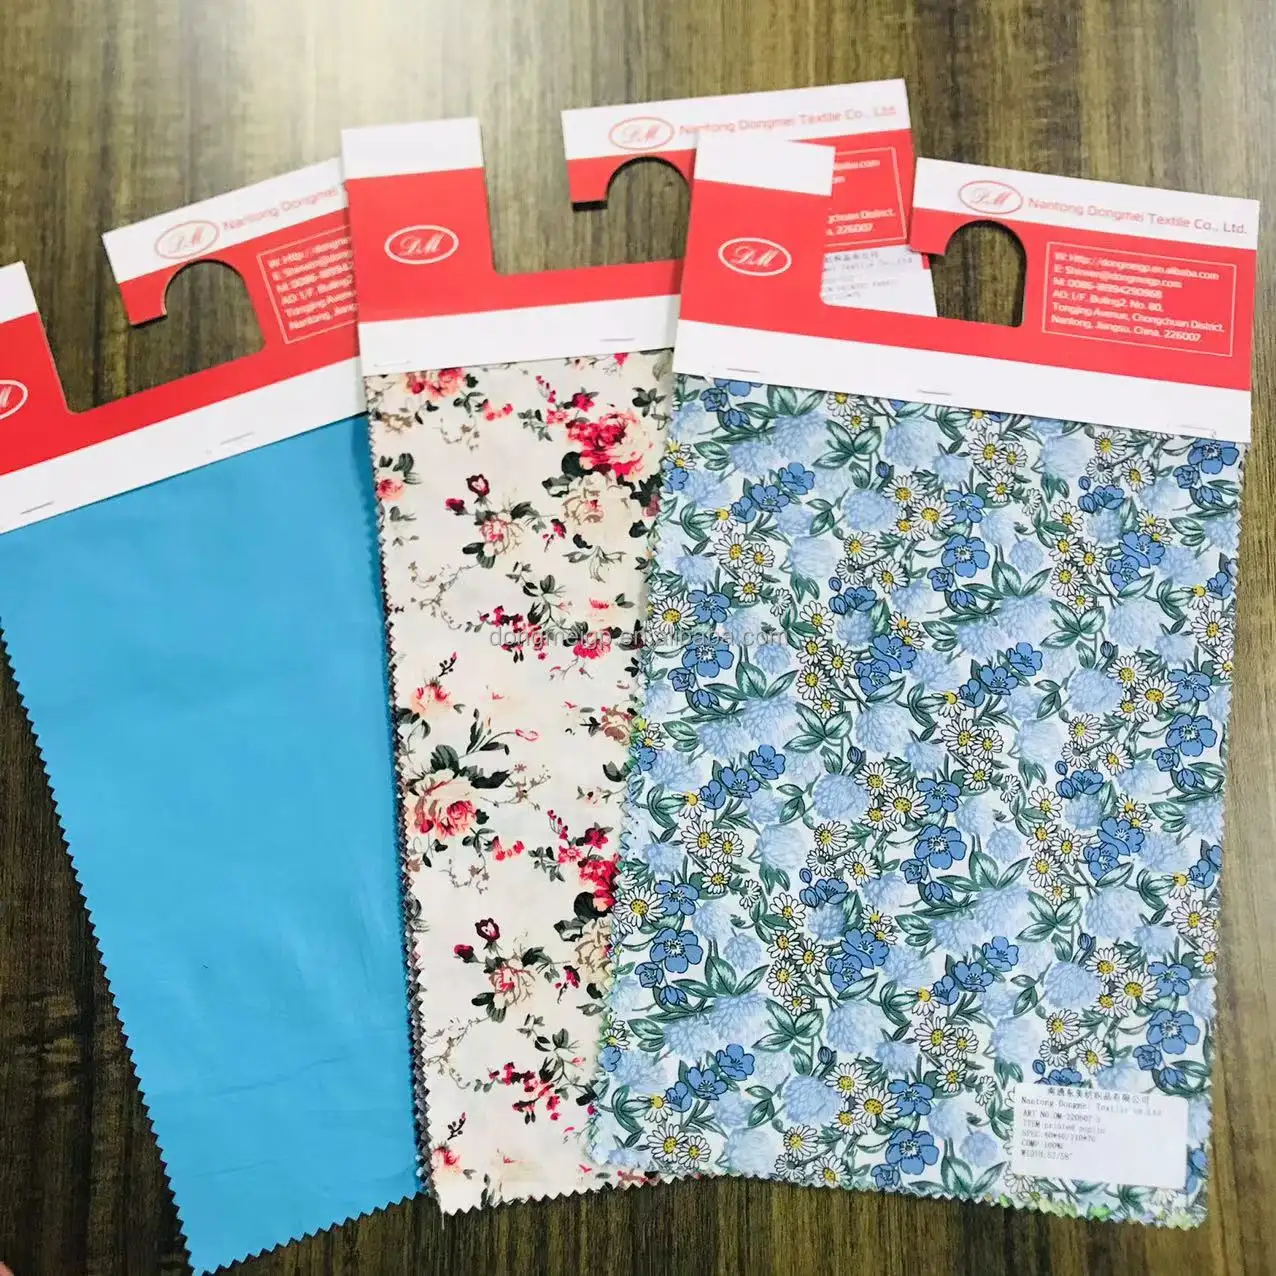 Nantong Dongmei Textile Co., LTD free fabric A4 sample link